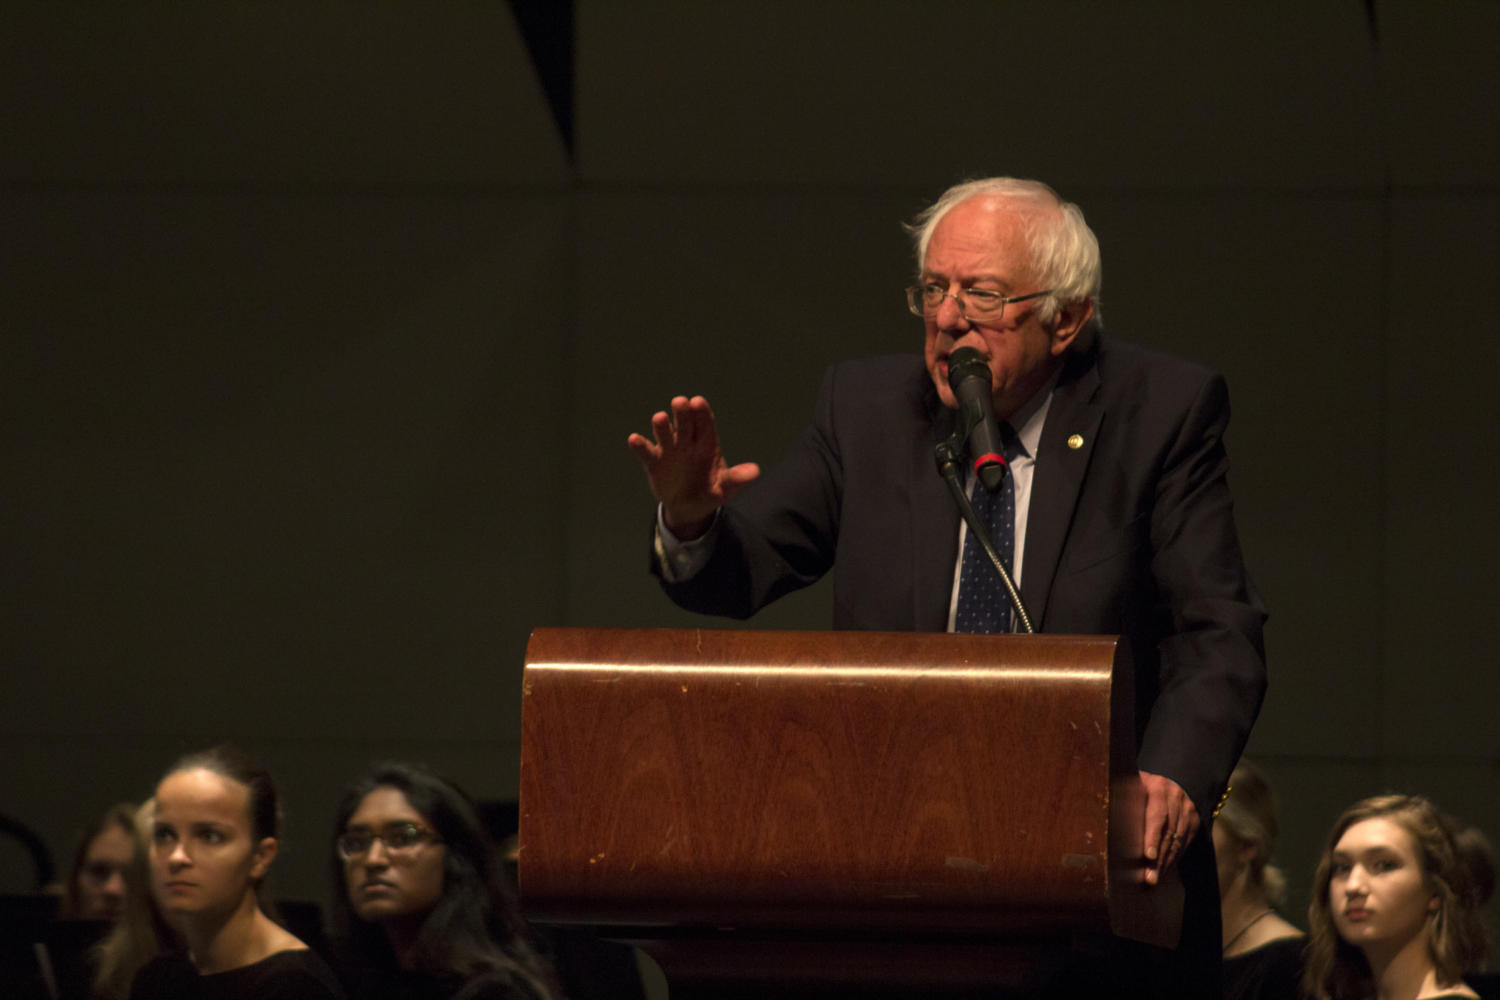 Sen. Bernie Sanders visits NCHS to spread his message